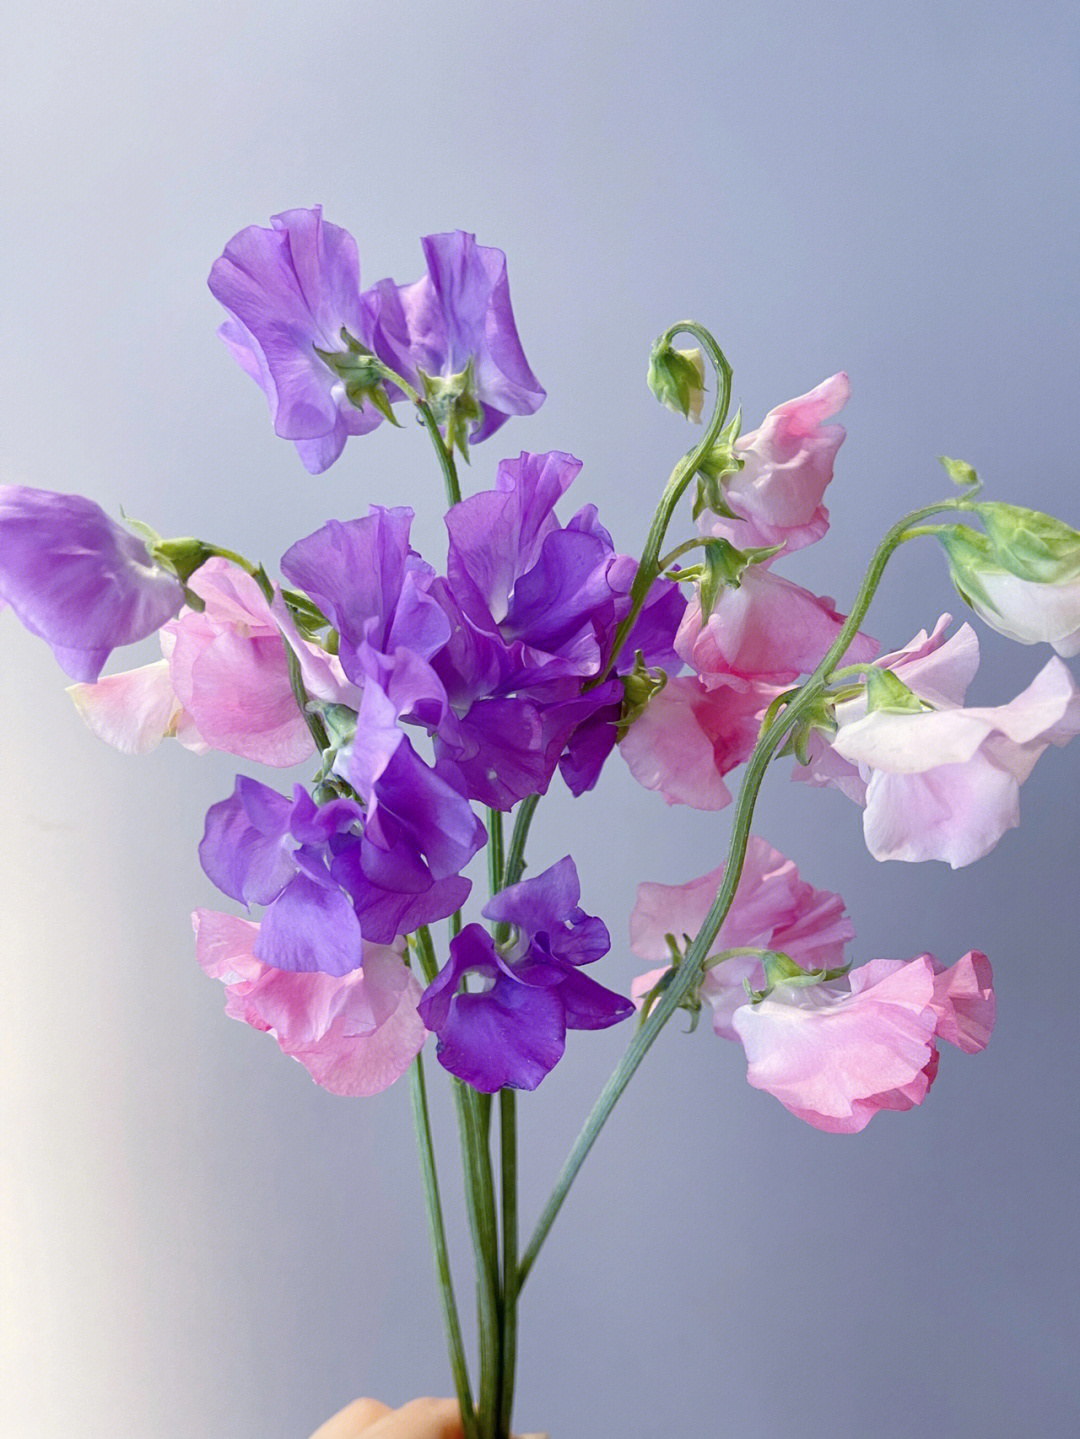 【day138】香豌豆花花言花语:甜蜜的回忆养护花期:一周左右上市季节